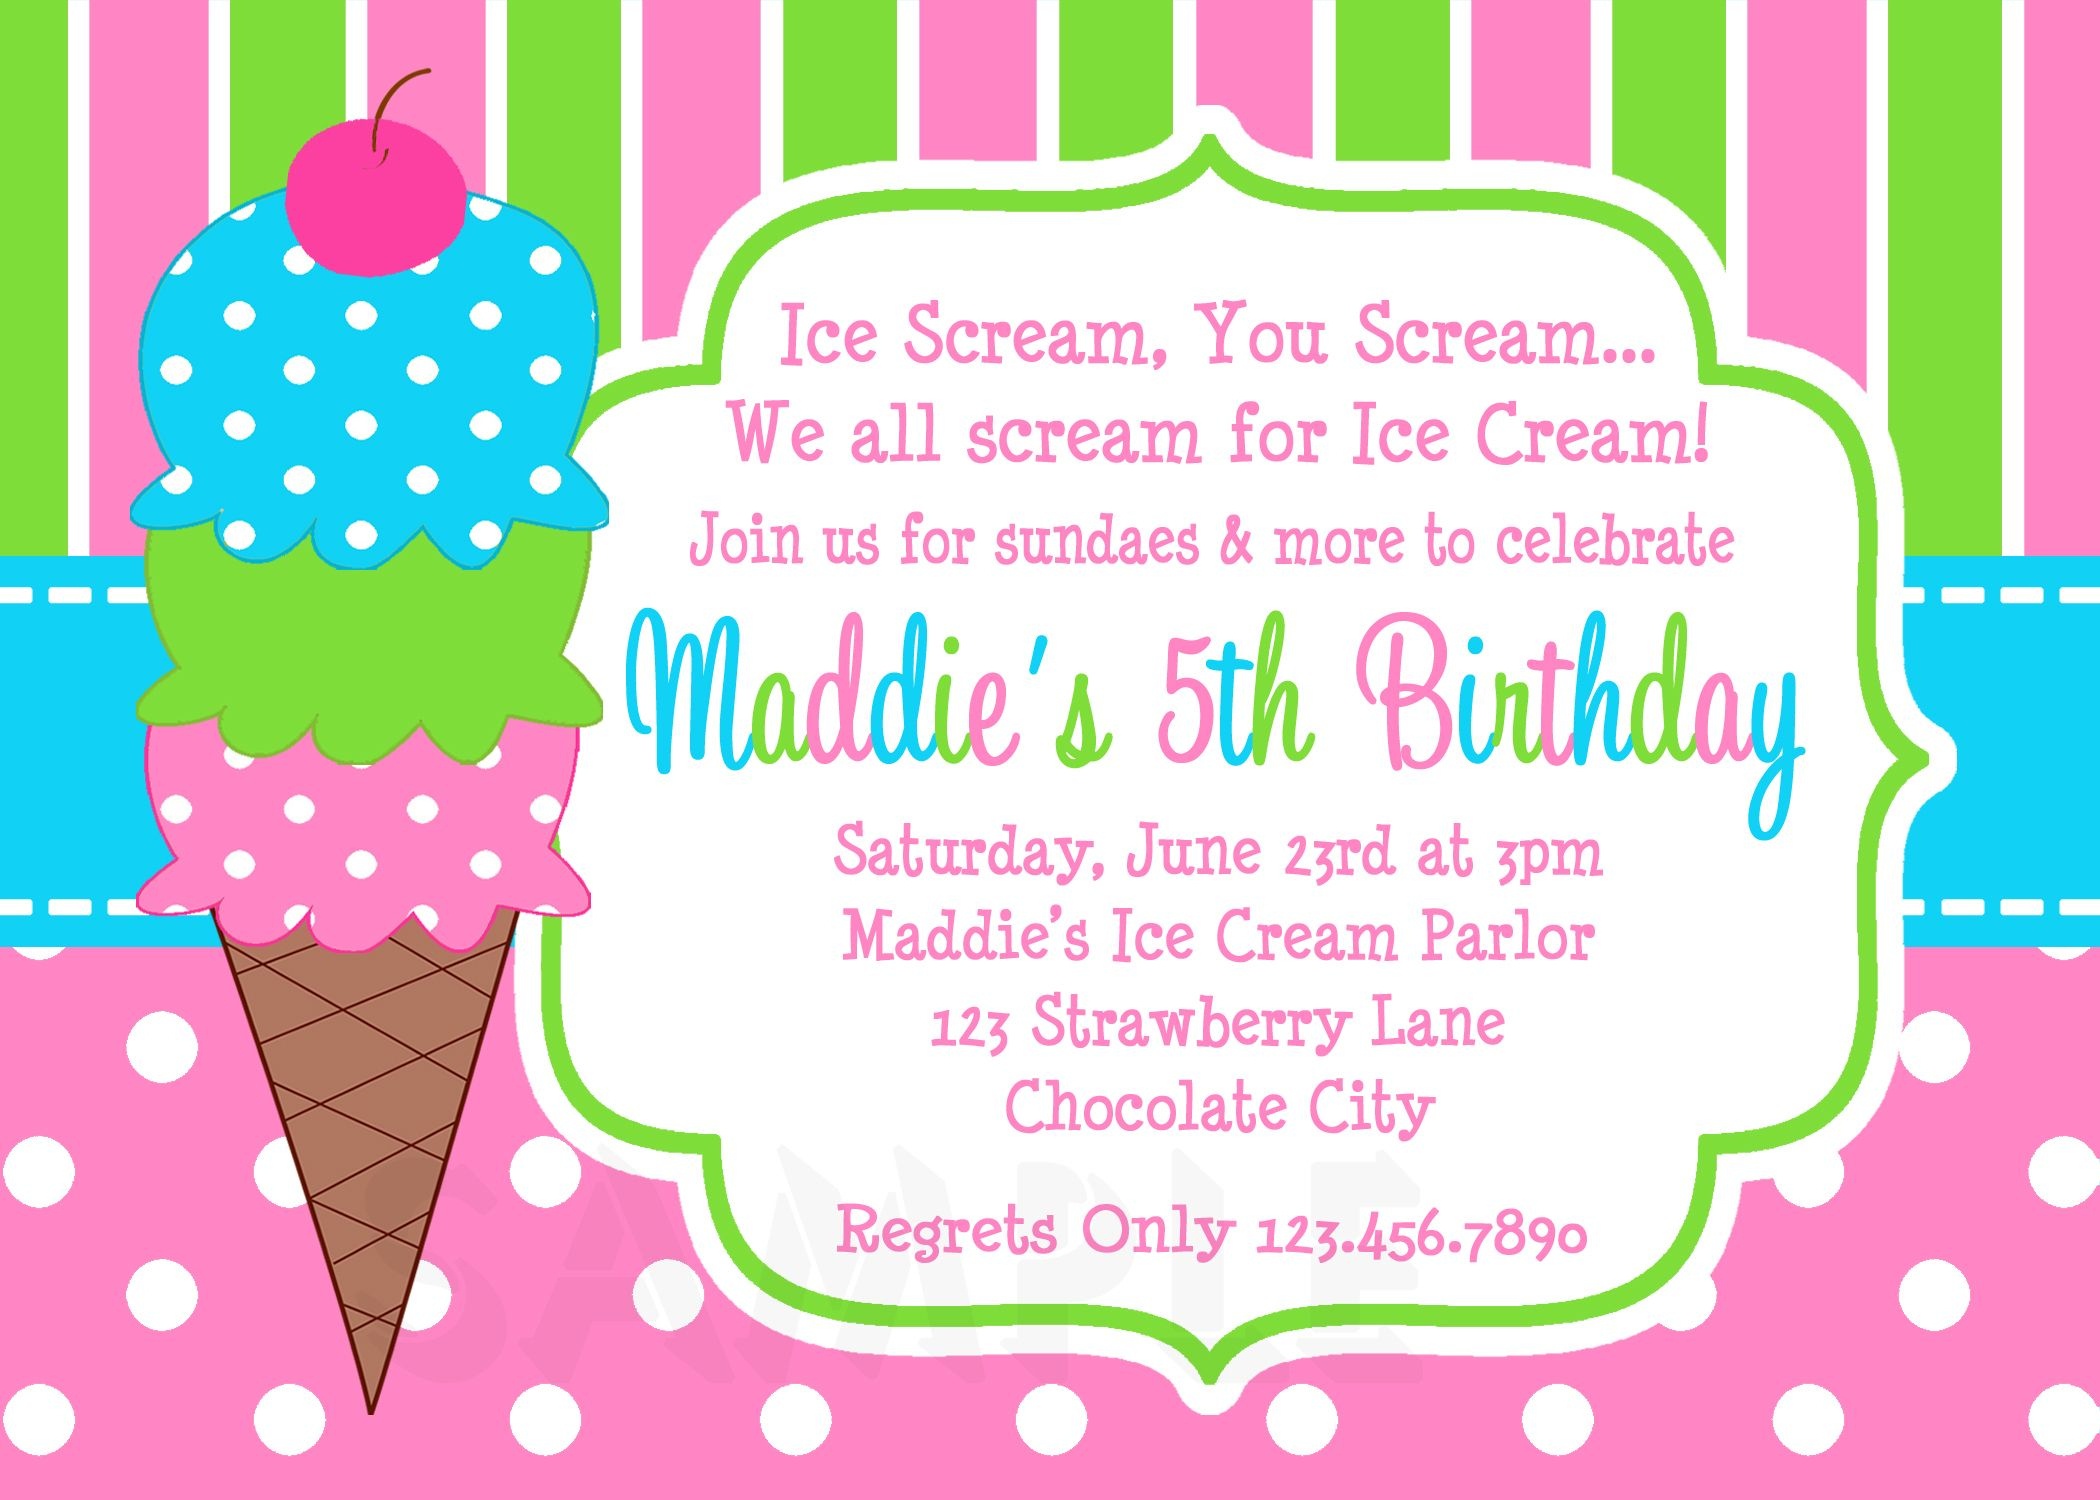 Ice Cream Birthday Party Invitations Pink Green In 2019 | Party - Ice Cream Party Invitations Printable Free